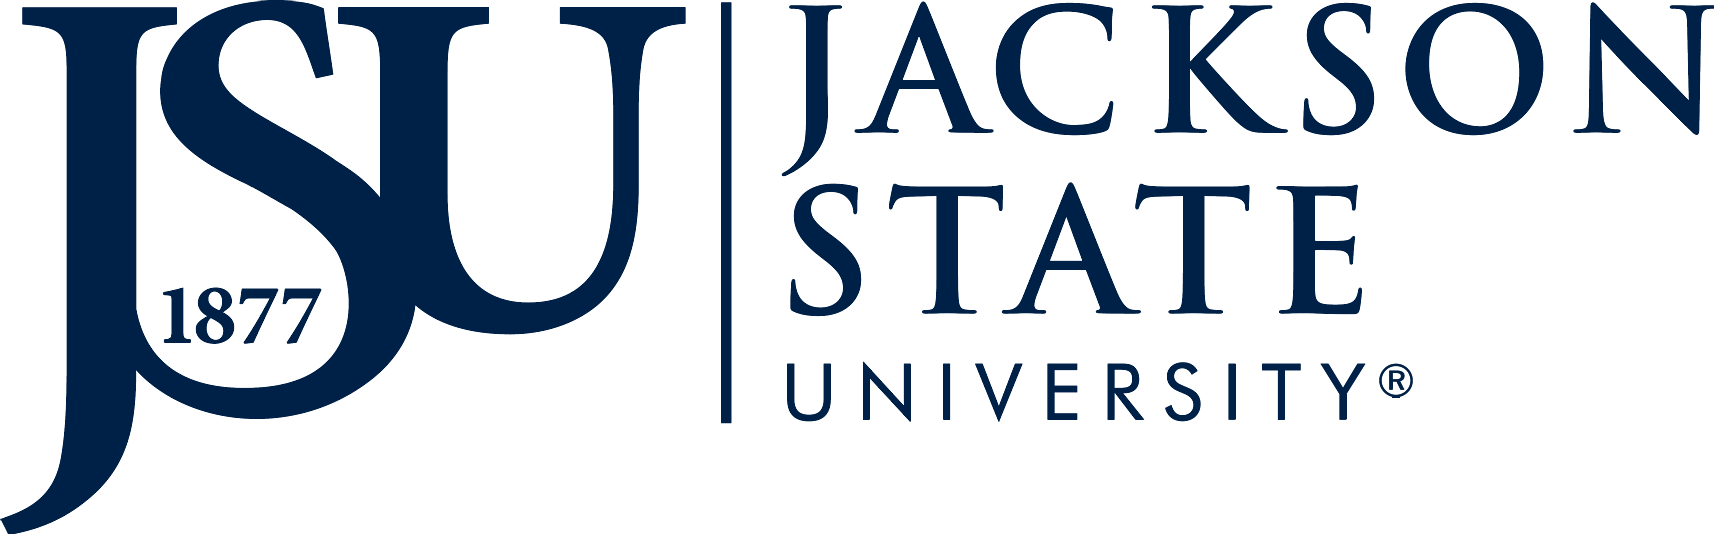 Jackson_State_University_logo.png